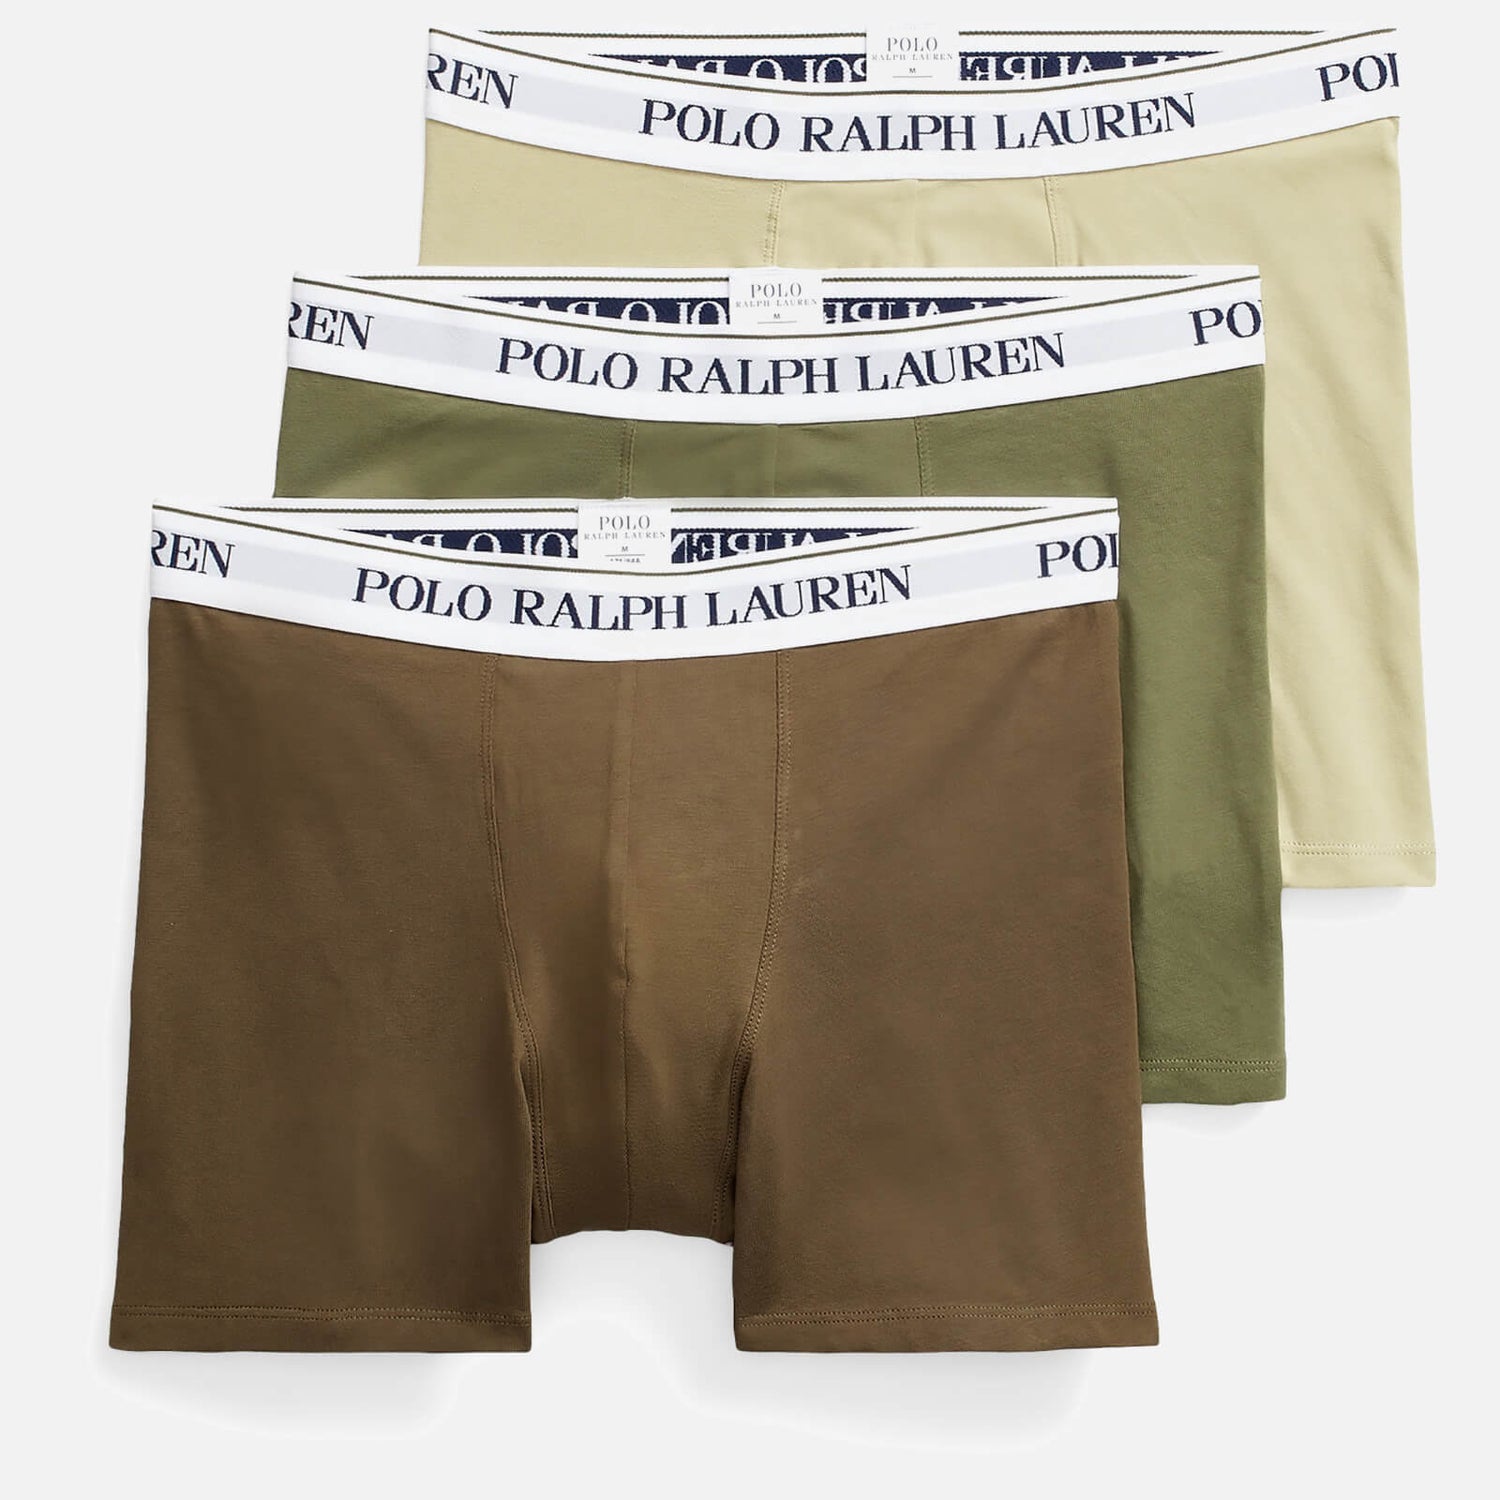 Polo Ralph Lauren Men's 3-Pack Boxer Briefs - Light Olive/Army Olive/Defender Green - S